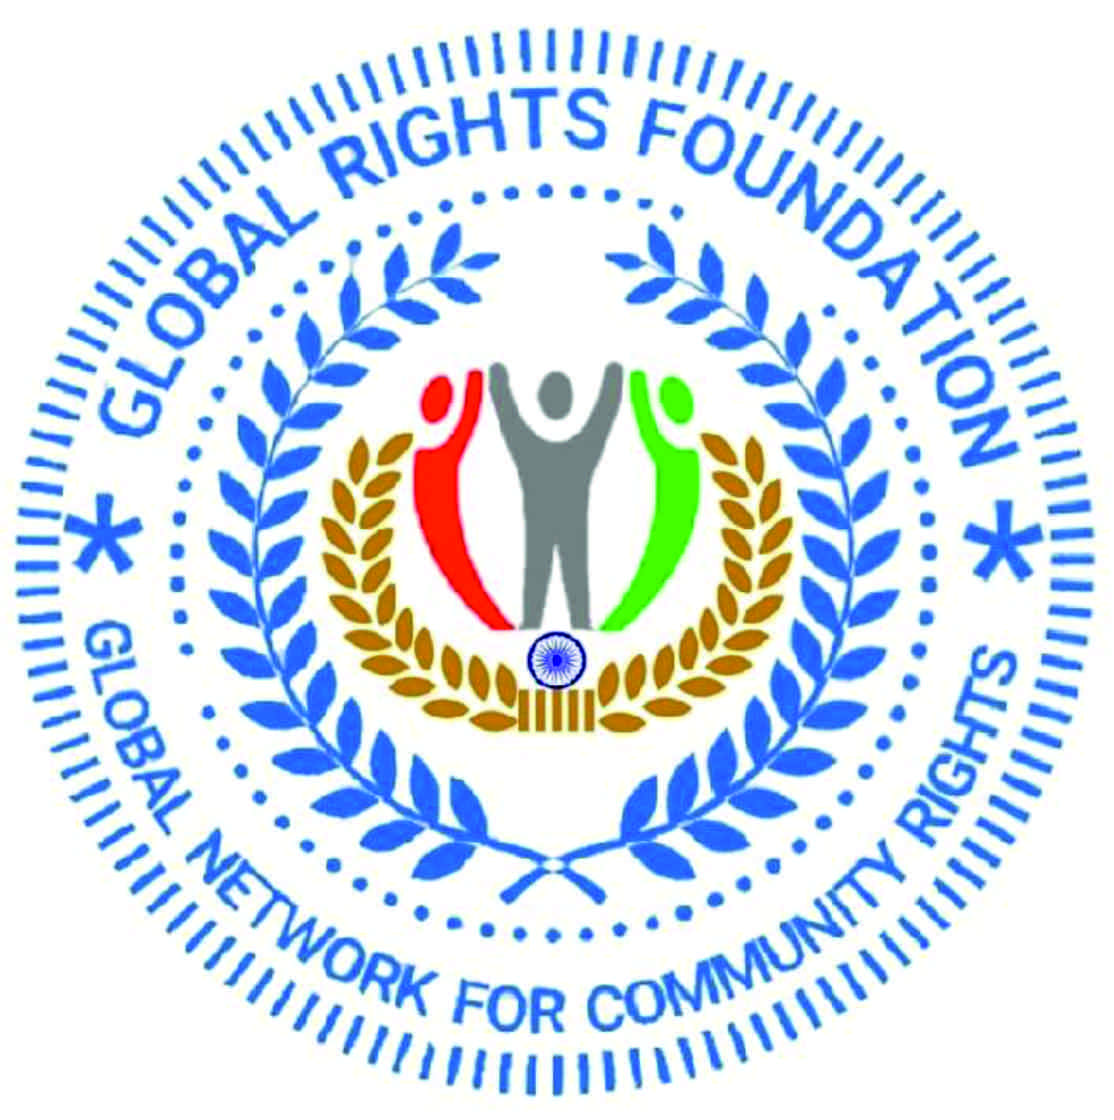 Global Rights Foundation logo.jpg G